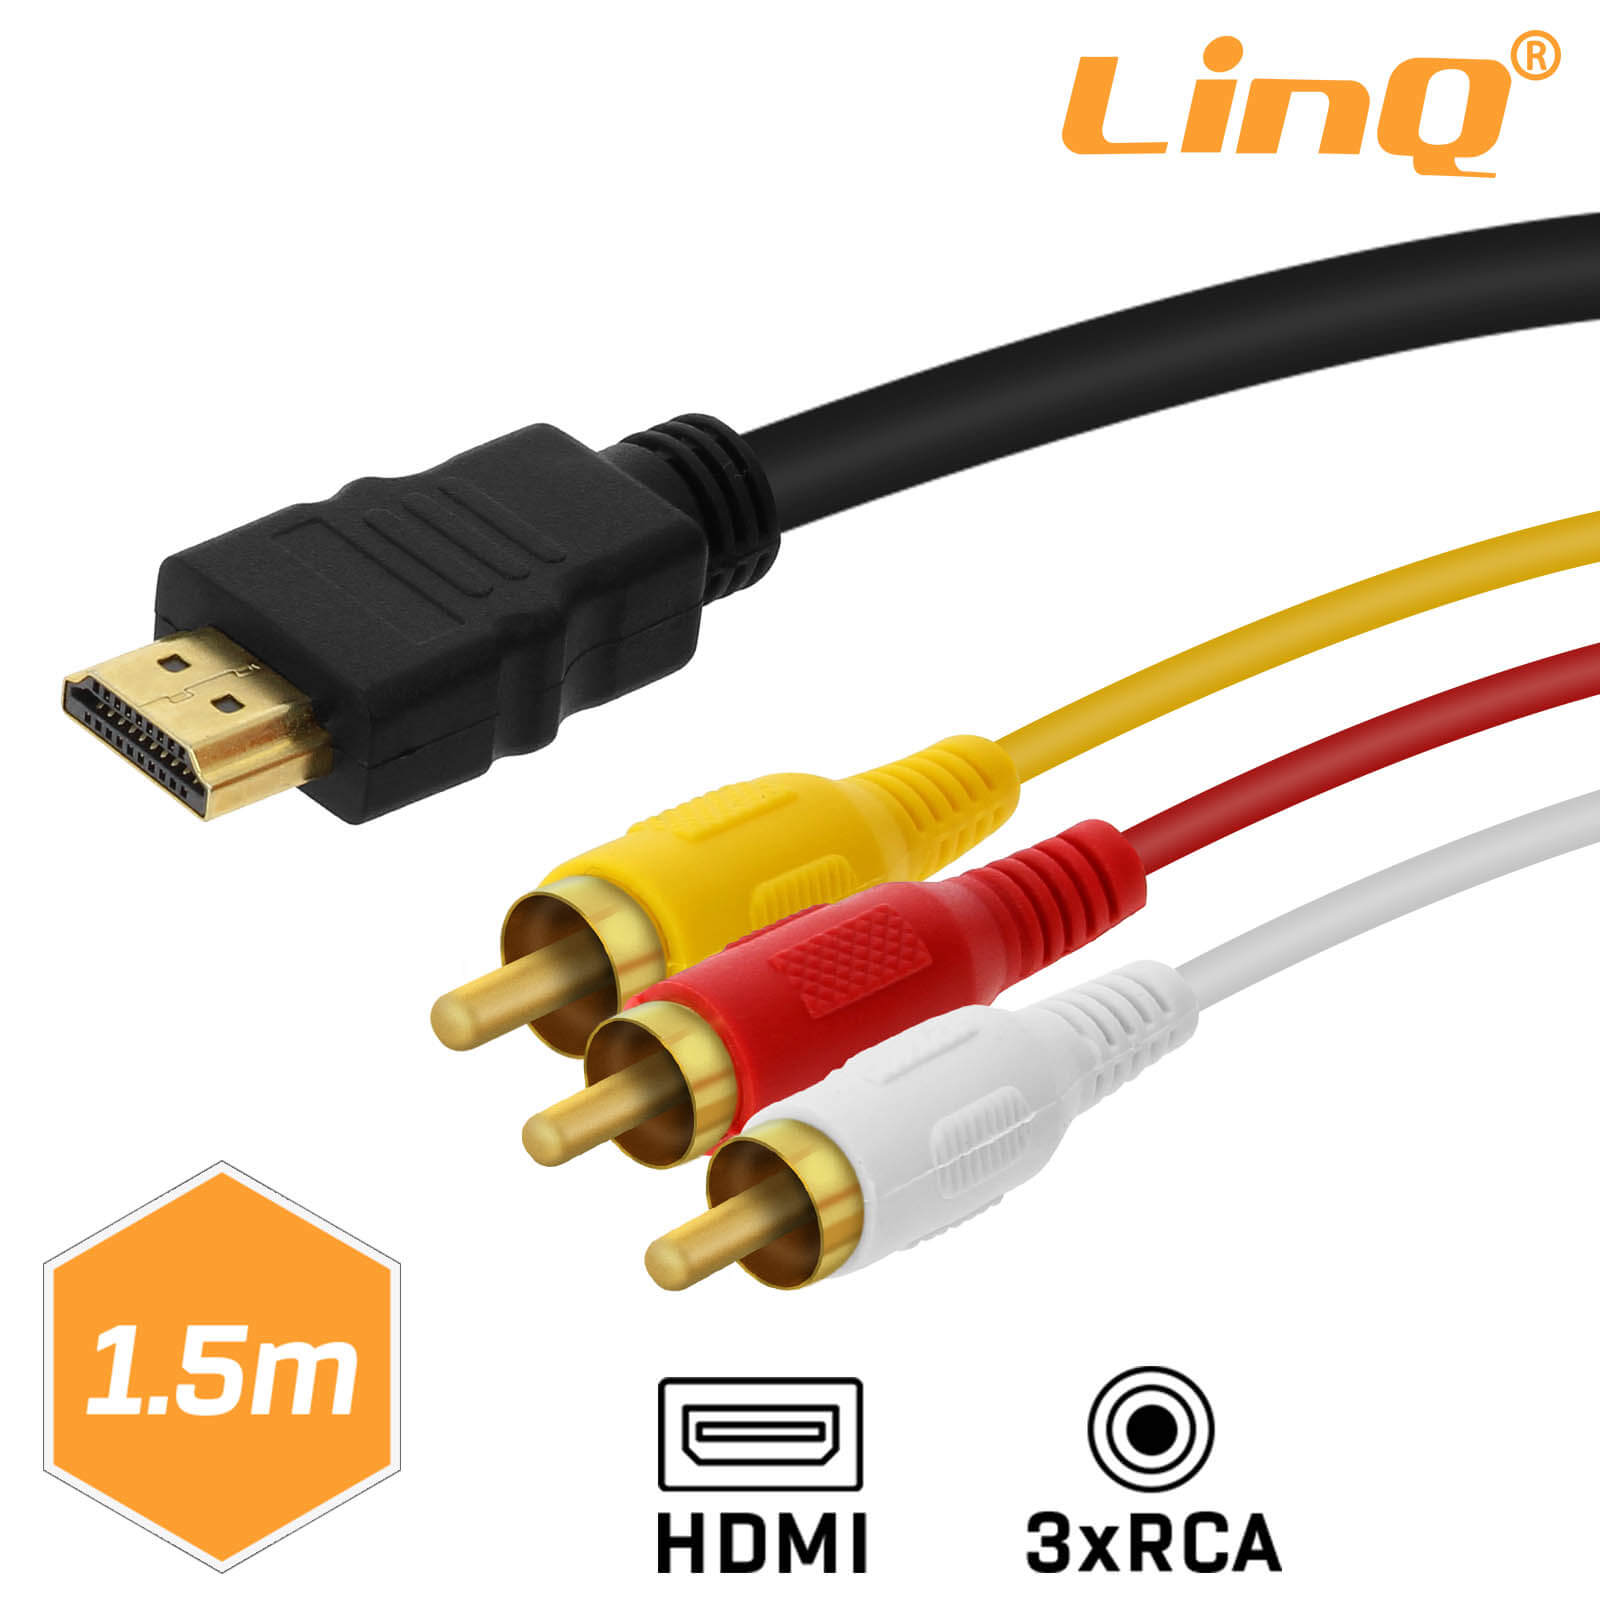 Cable HDMI a 3x RCA macho 1,5 m, LinQ - Negro - Spain